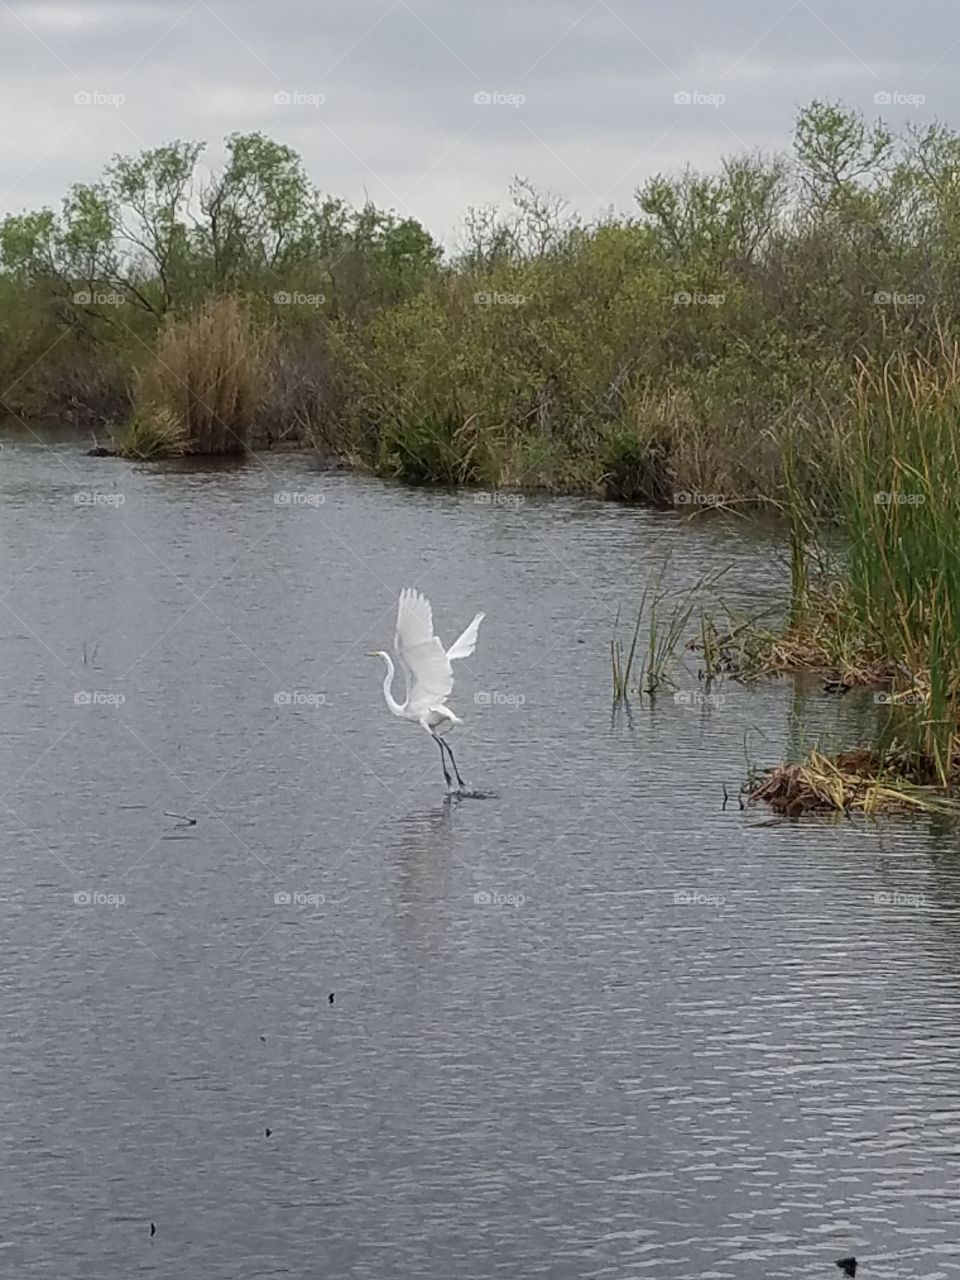 Wildlife at The Everglades